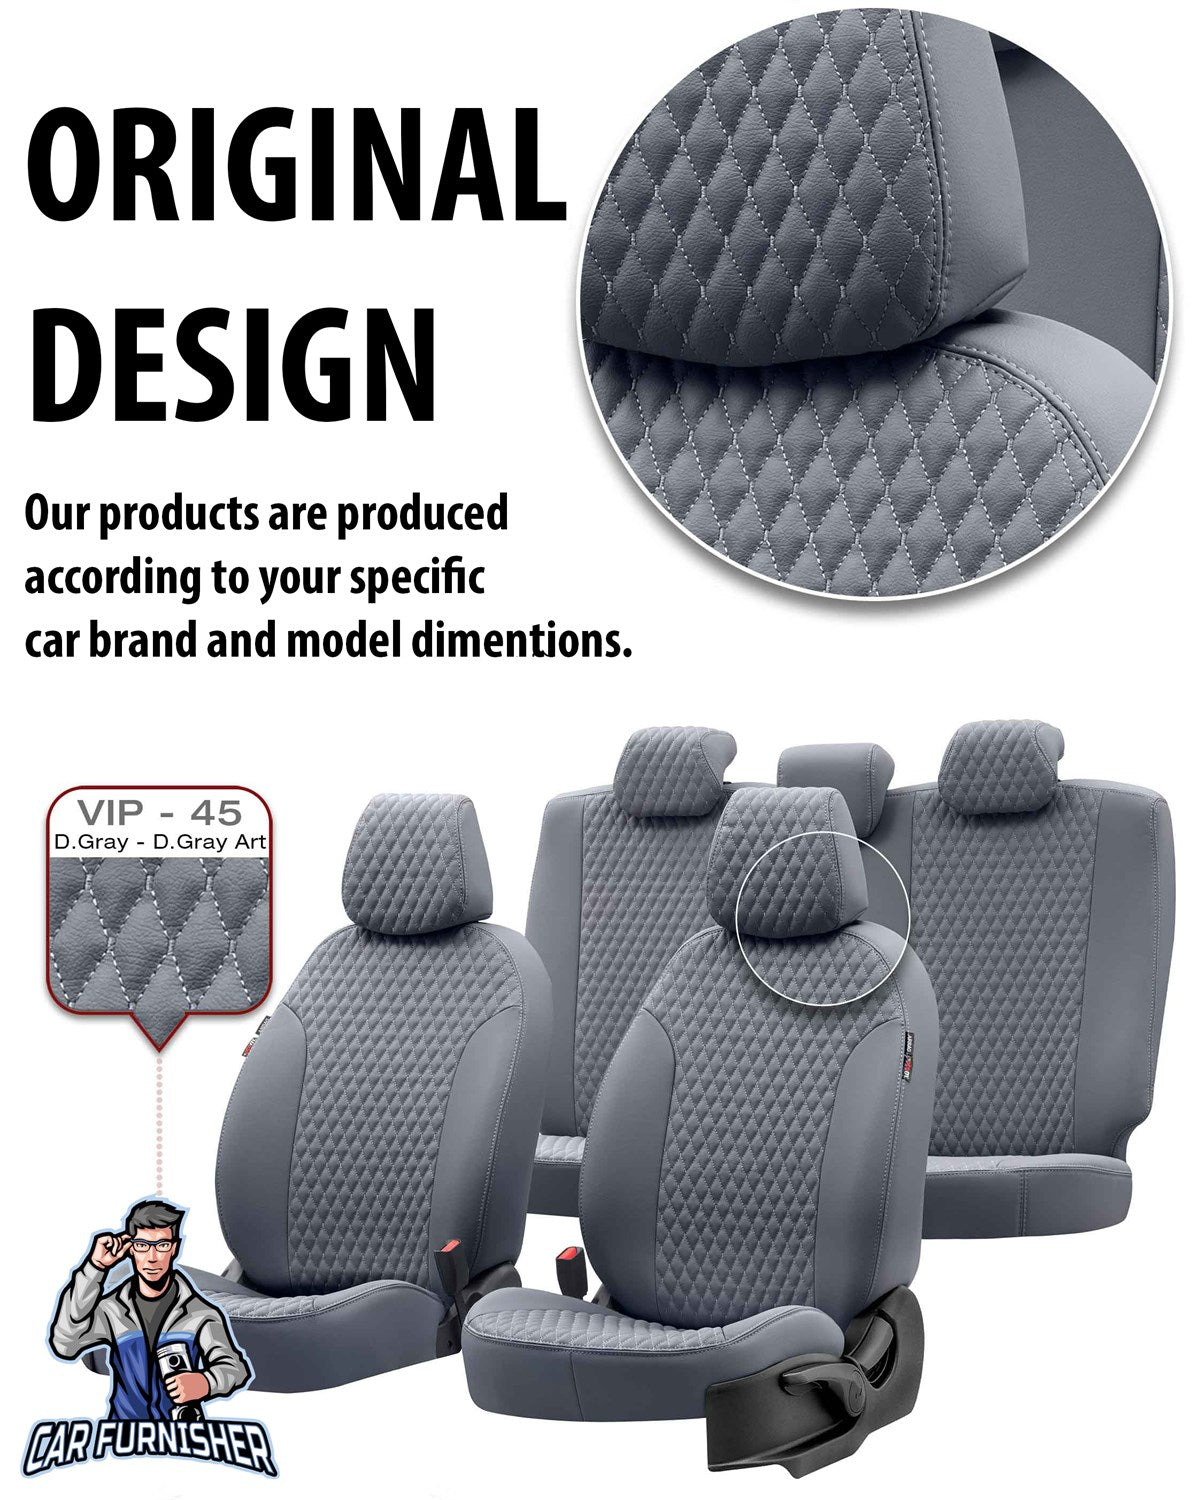 Mini Countryman Seat Covers Amsterdam Leather Design Black Leather